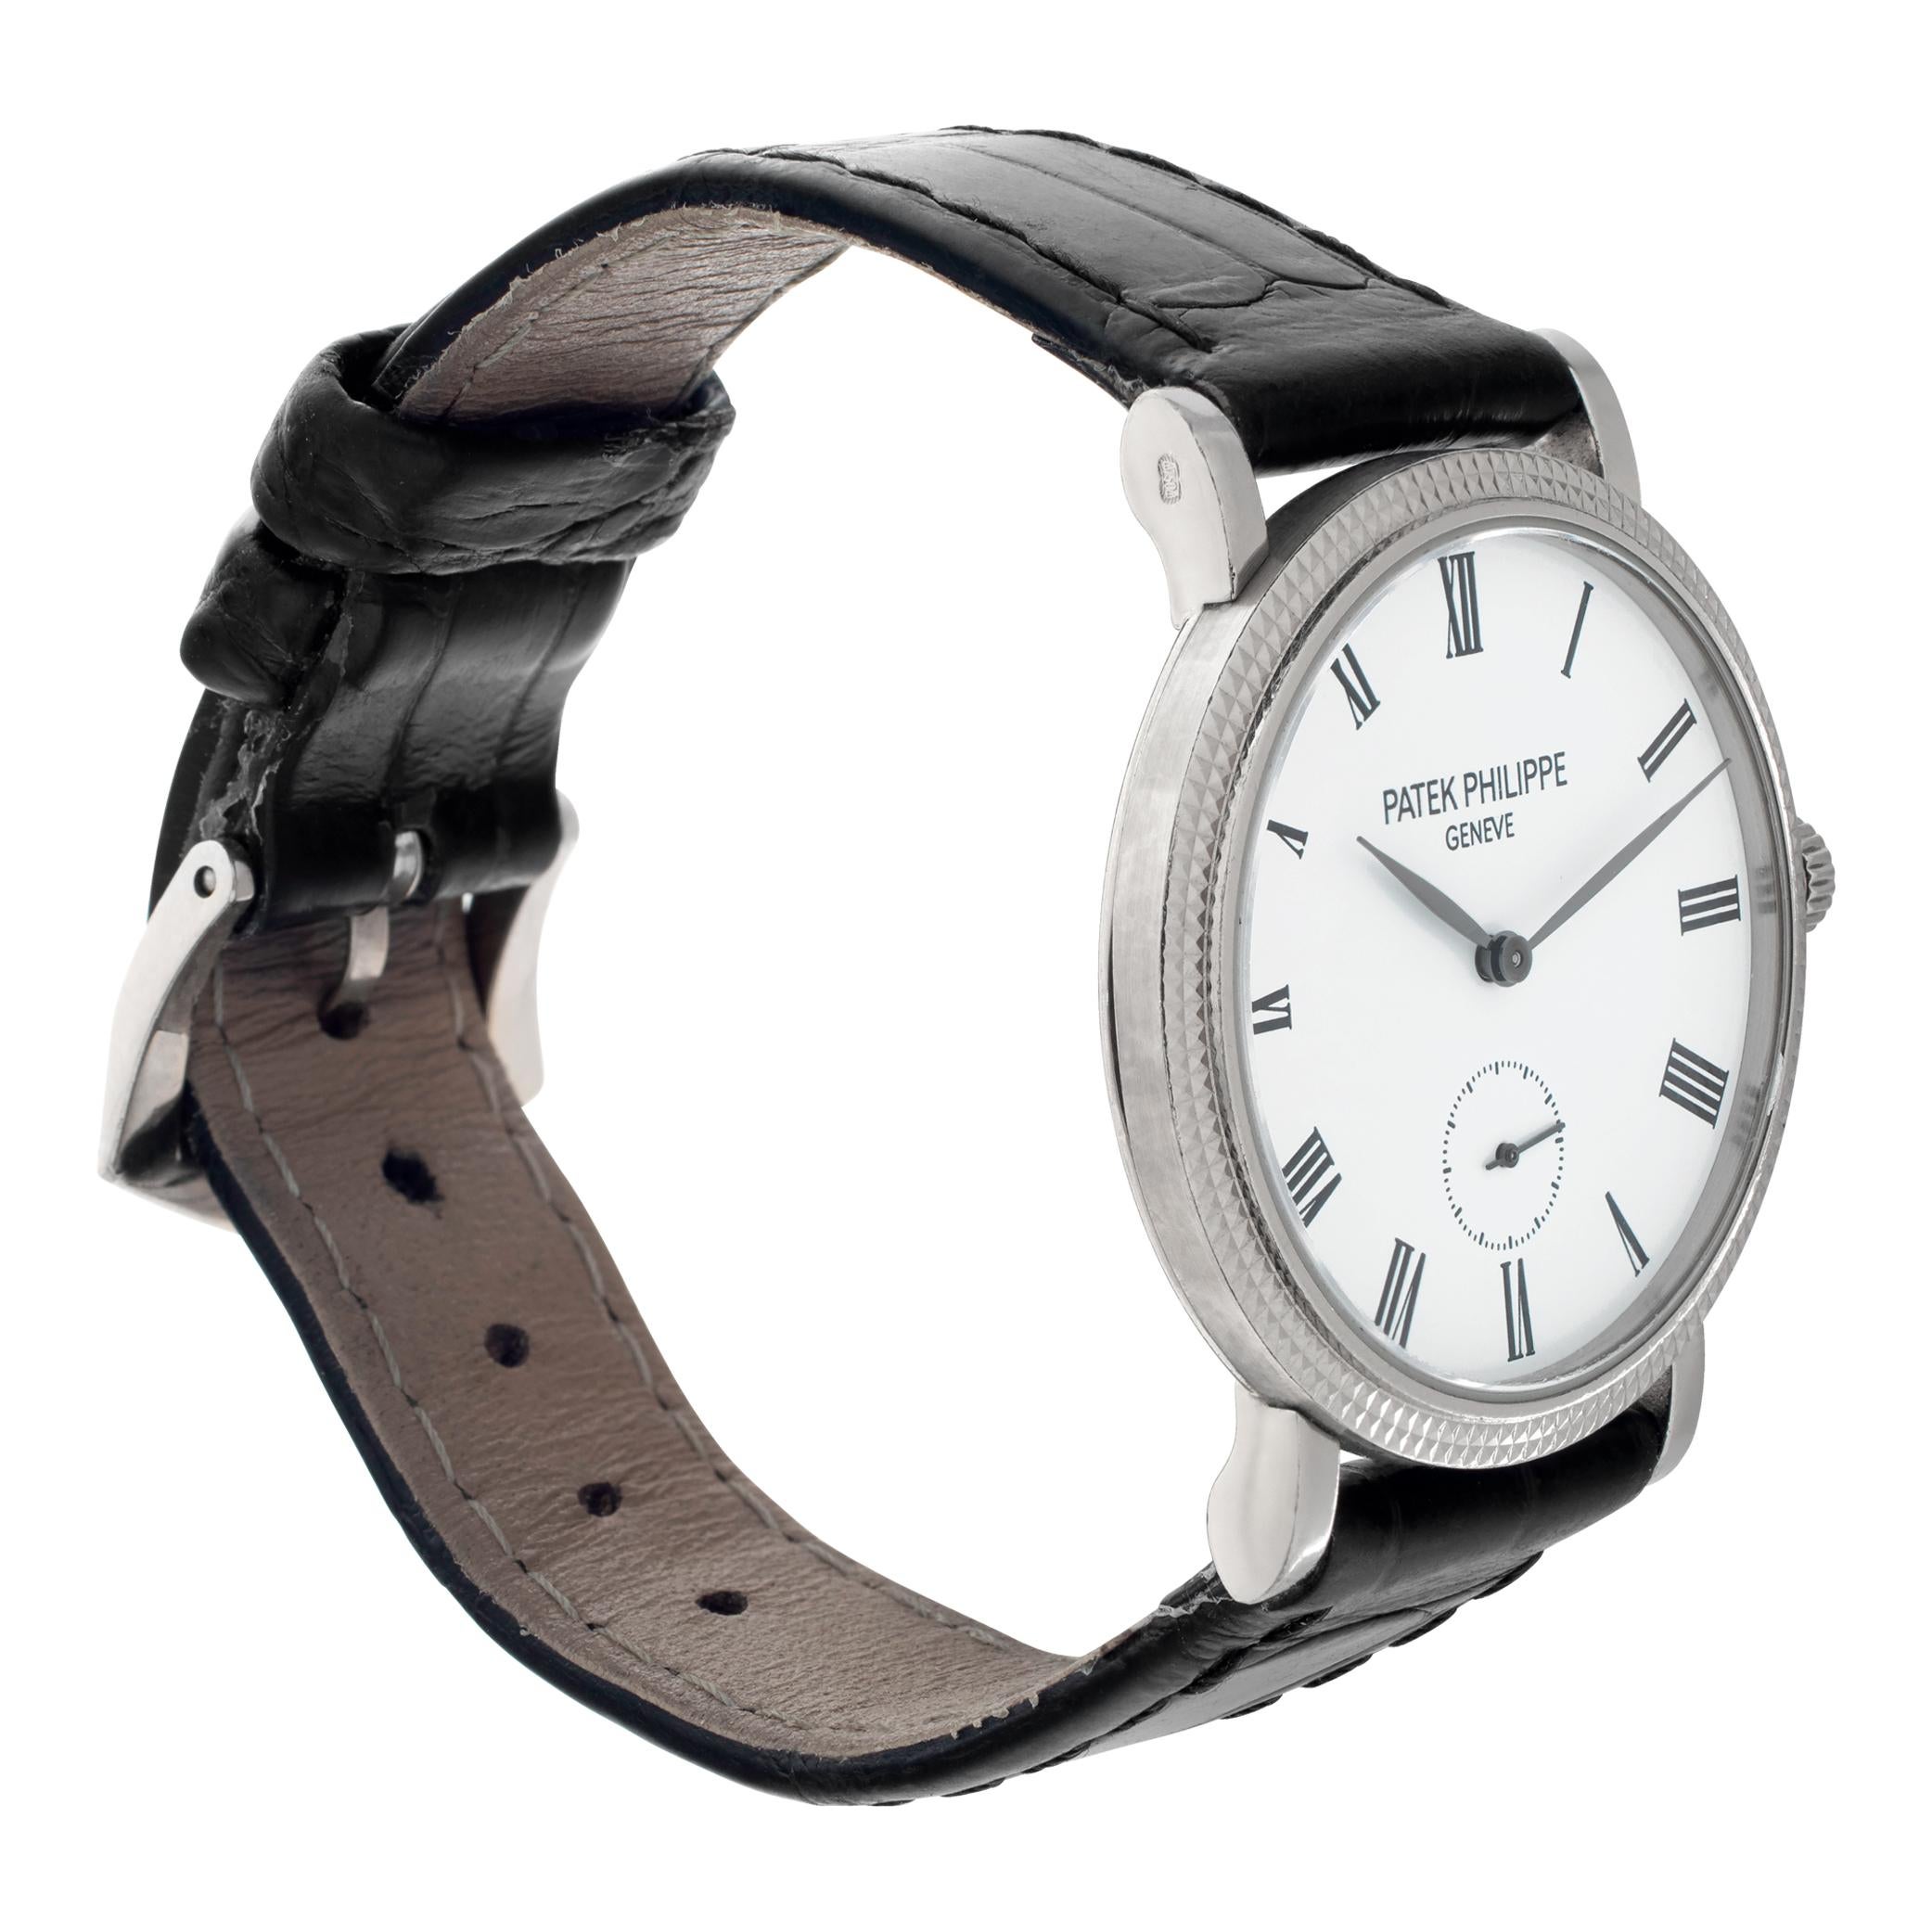 Patek Philippe Calatrava 18k white gold Manual Wristwatch Ref 7119 In Excellent Condition For Sale In Surfside, FL